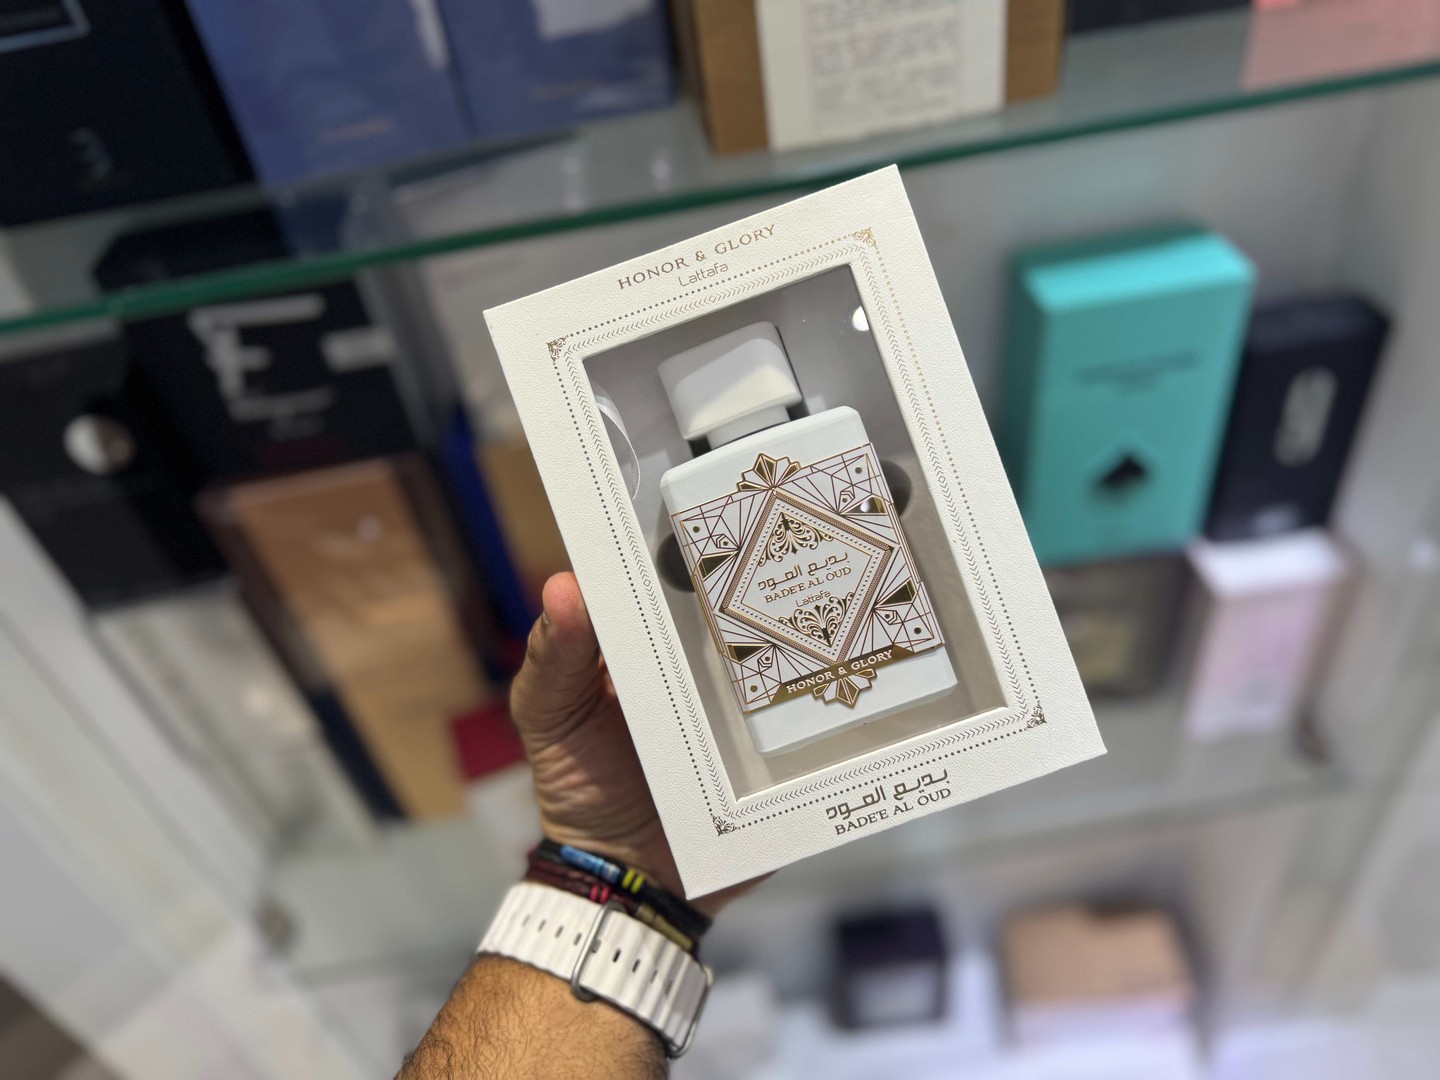 joyas, relojes y accesorios - PERFUME LATTAFA HONOR OF GLORY BADEE AL OUD - NUEVO 100ML RD$ 3,500 NEG 0